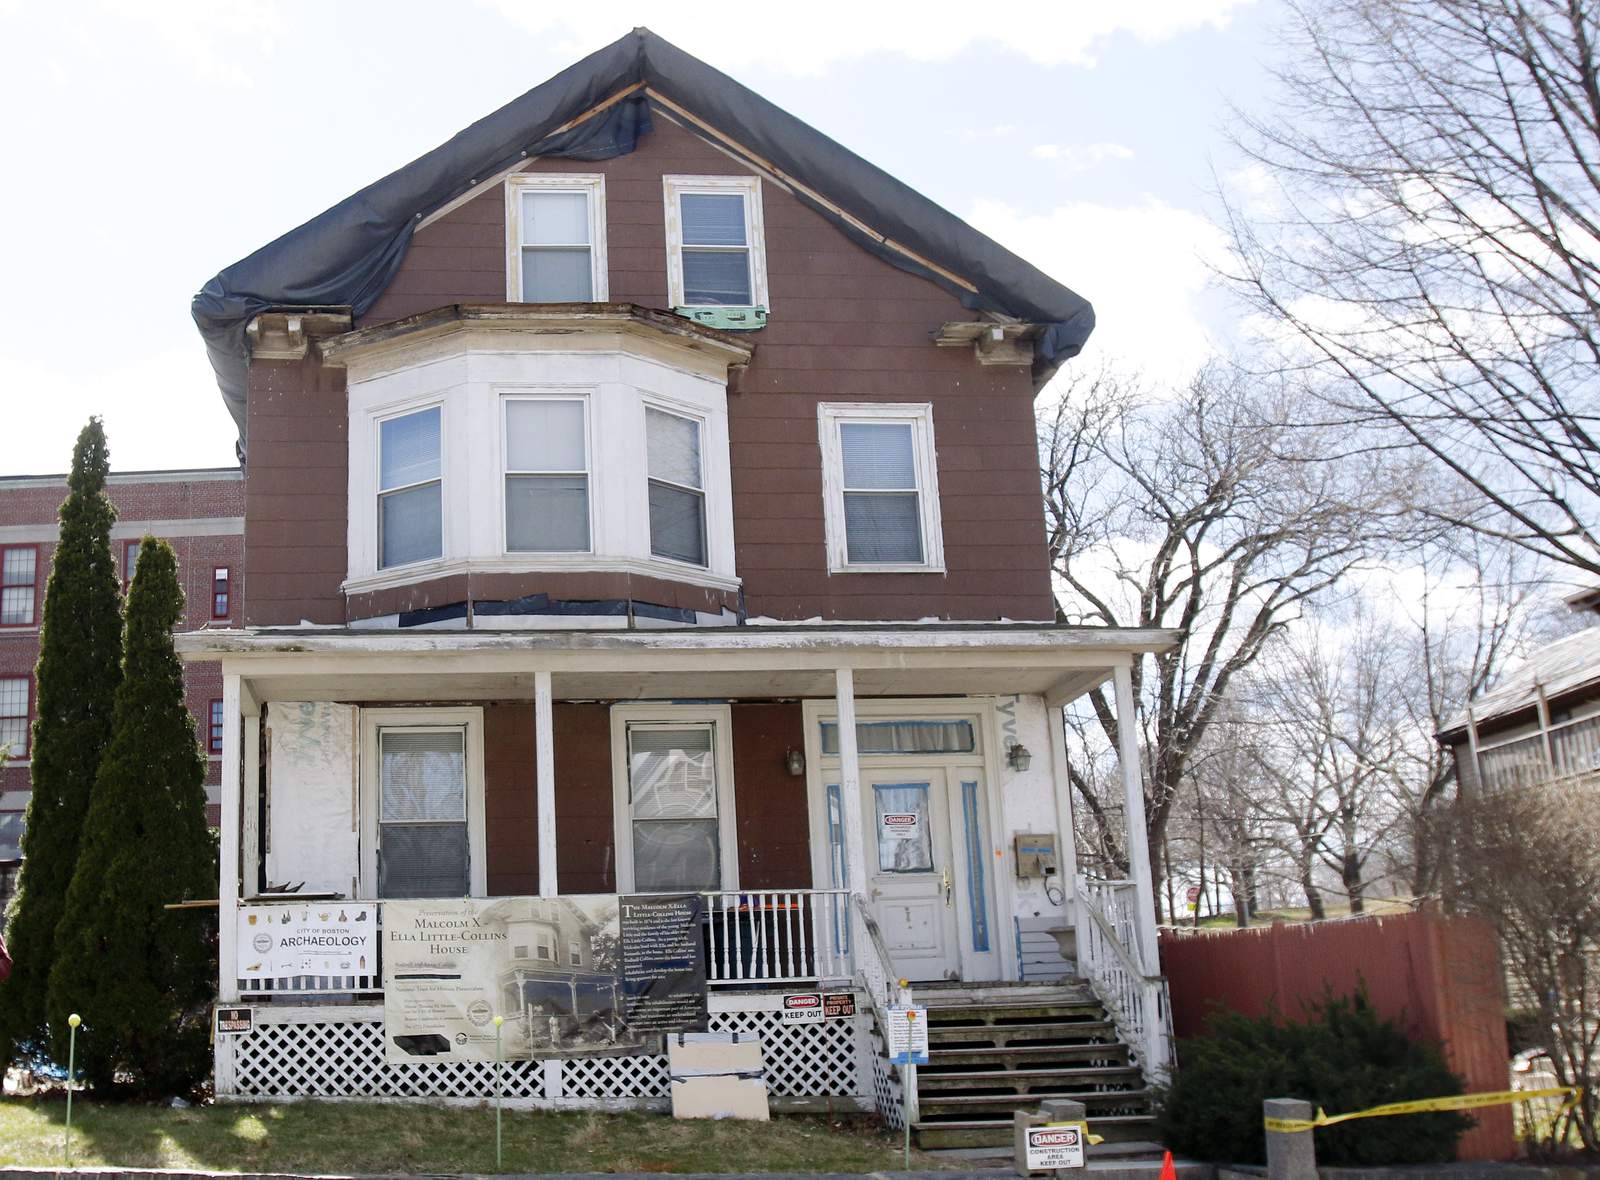 Malcolm X’s boyhood home in Boston gets historic designation